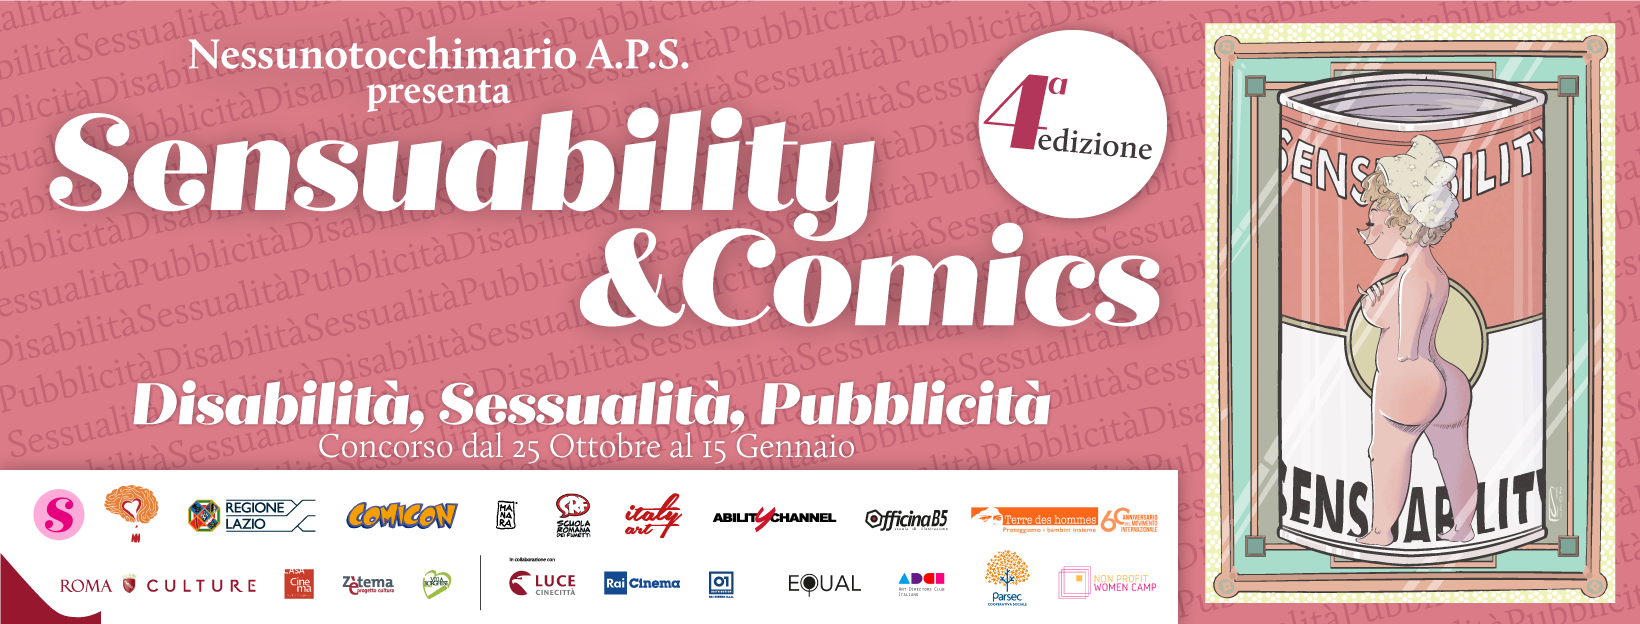 Sensuability&Comics: disabilità, sessualità e pubblicità!